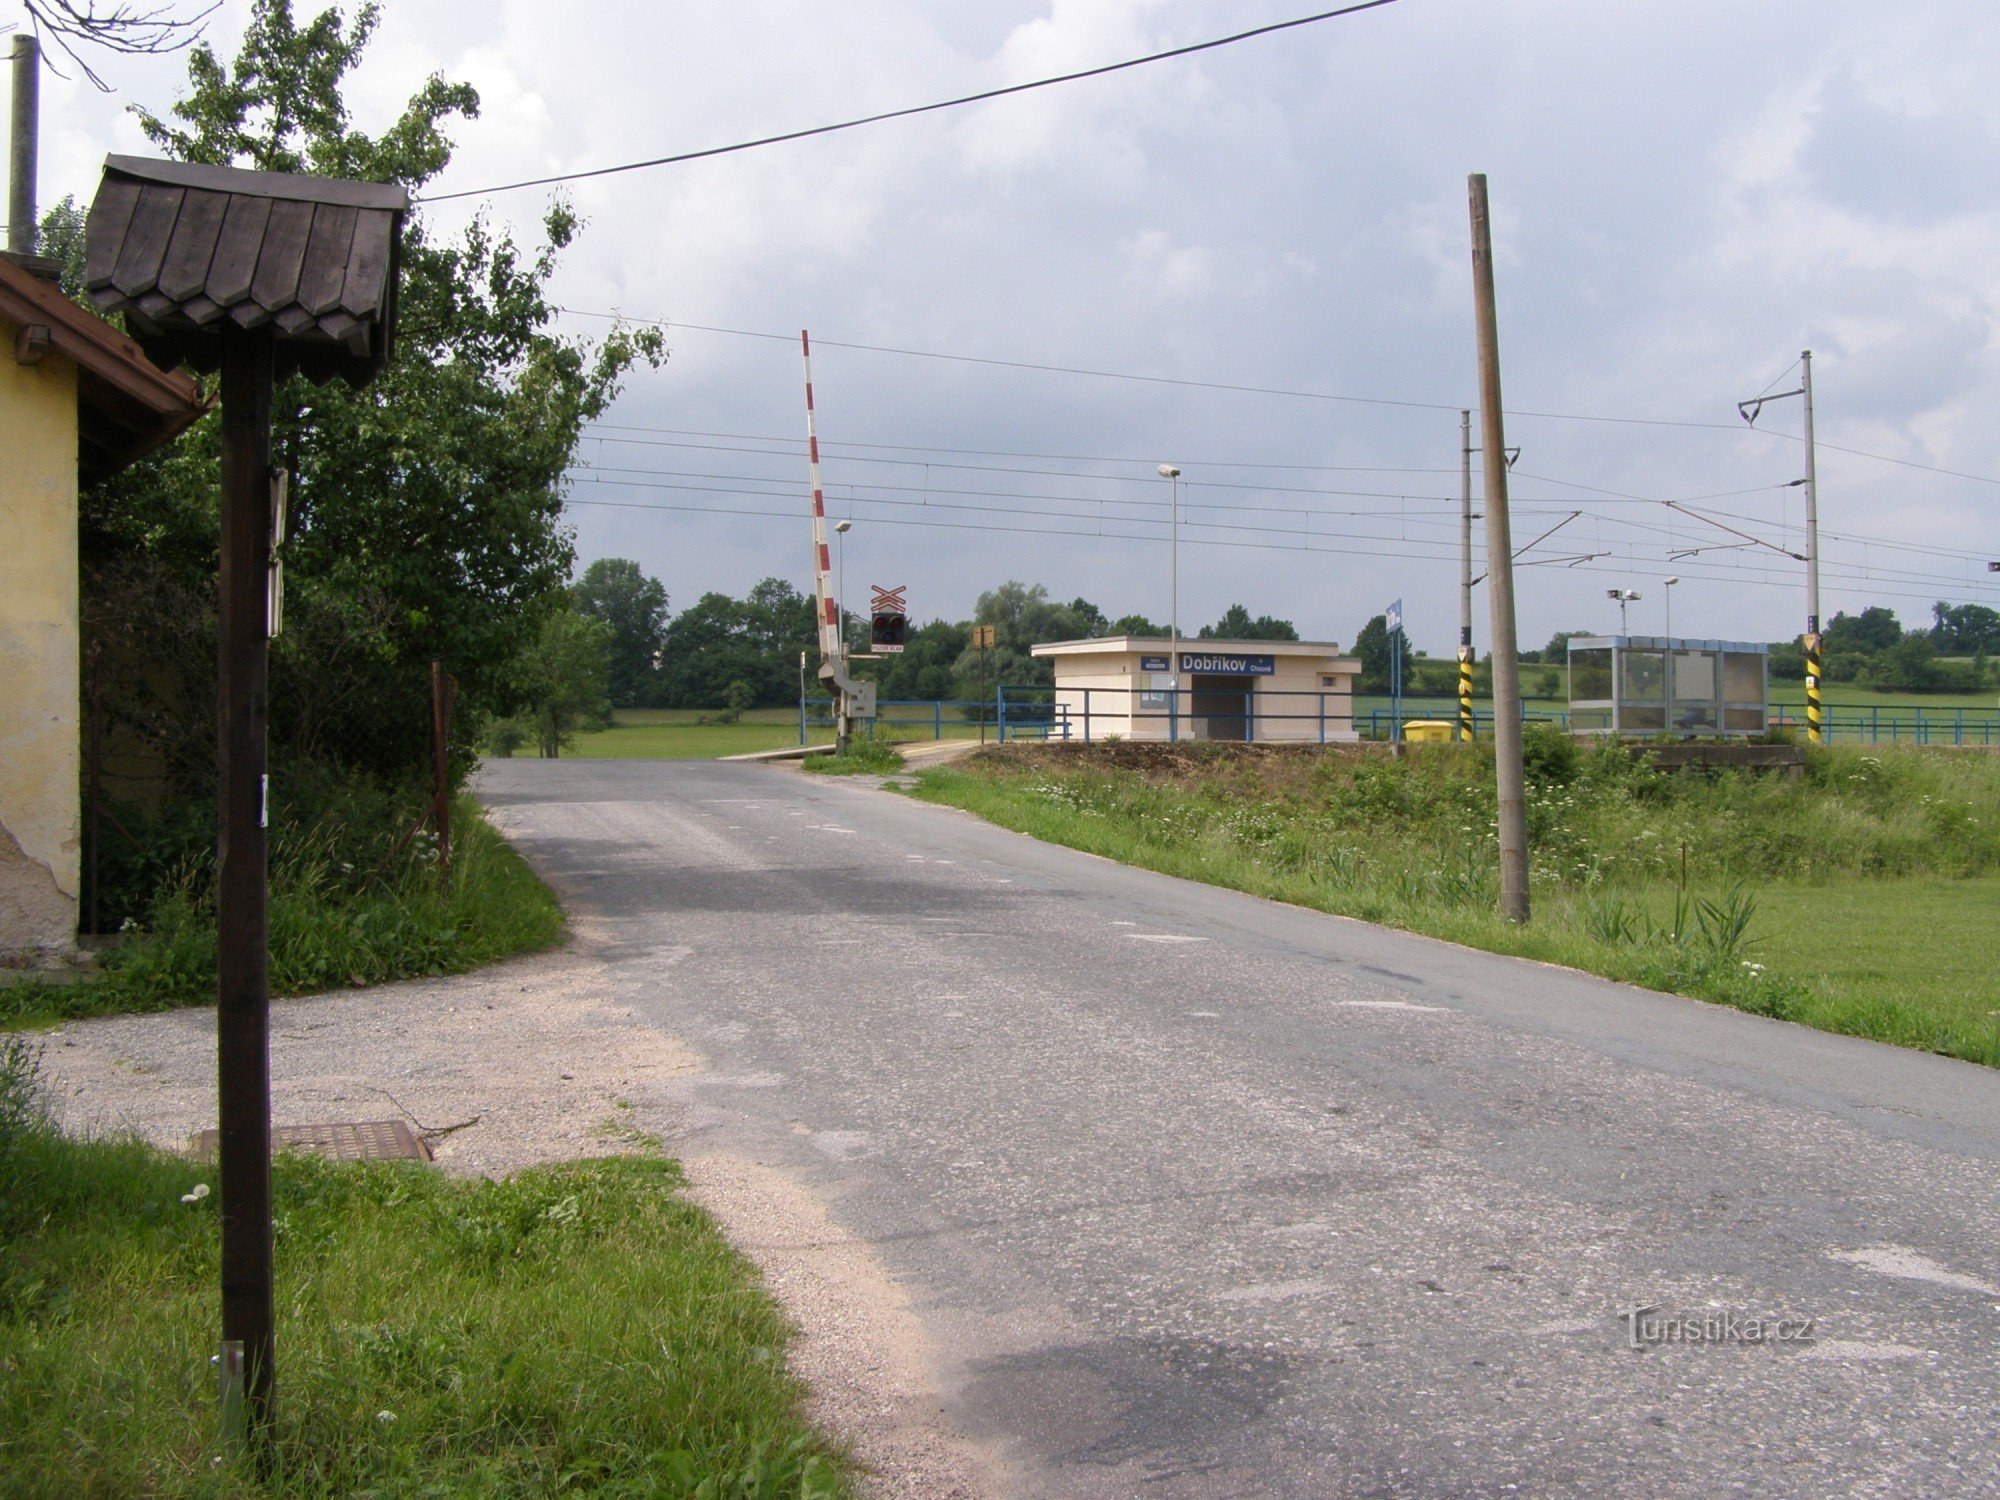 răscruce turistică Dobříkov - calea ferată